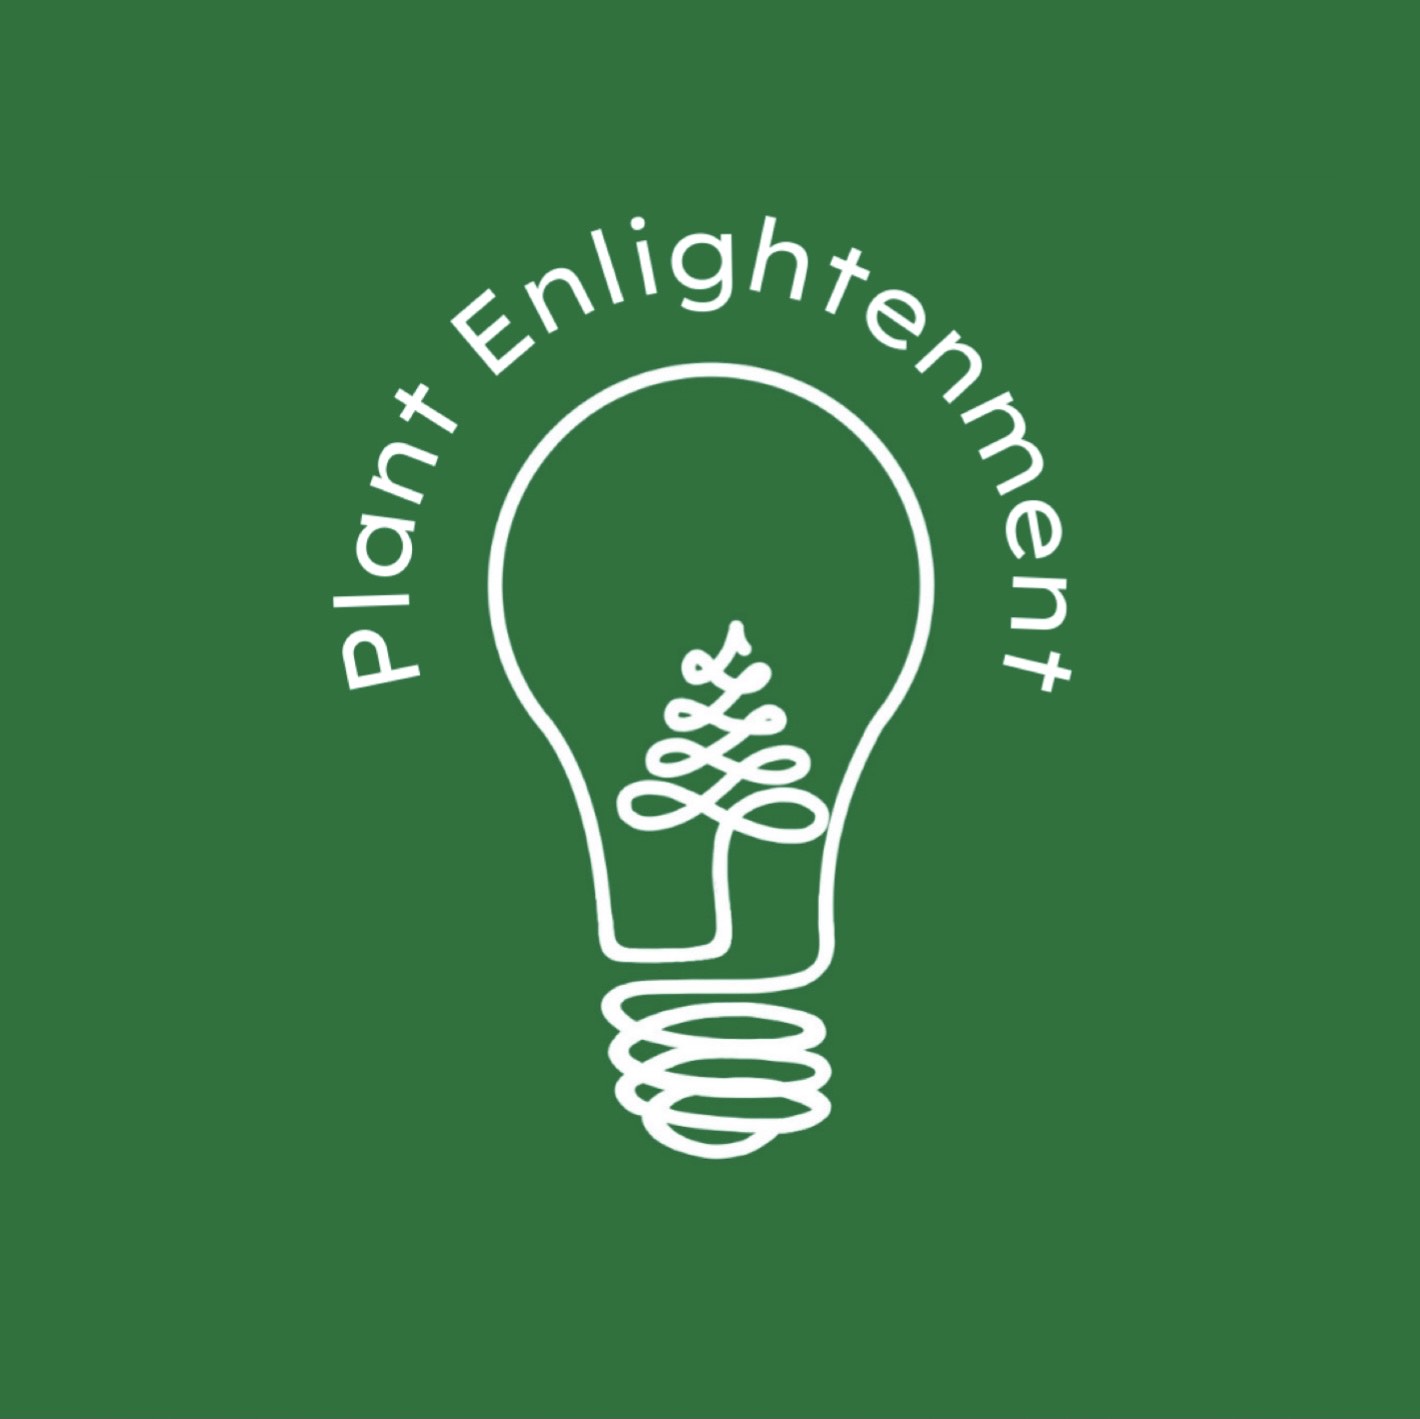 Plant Enlightenment